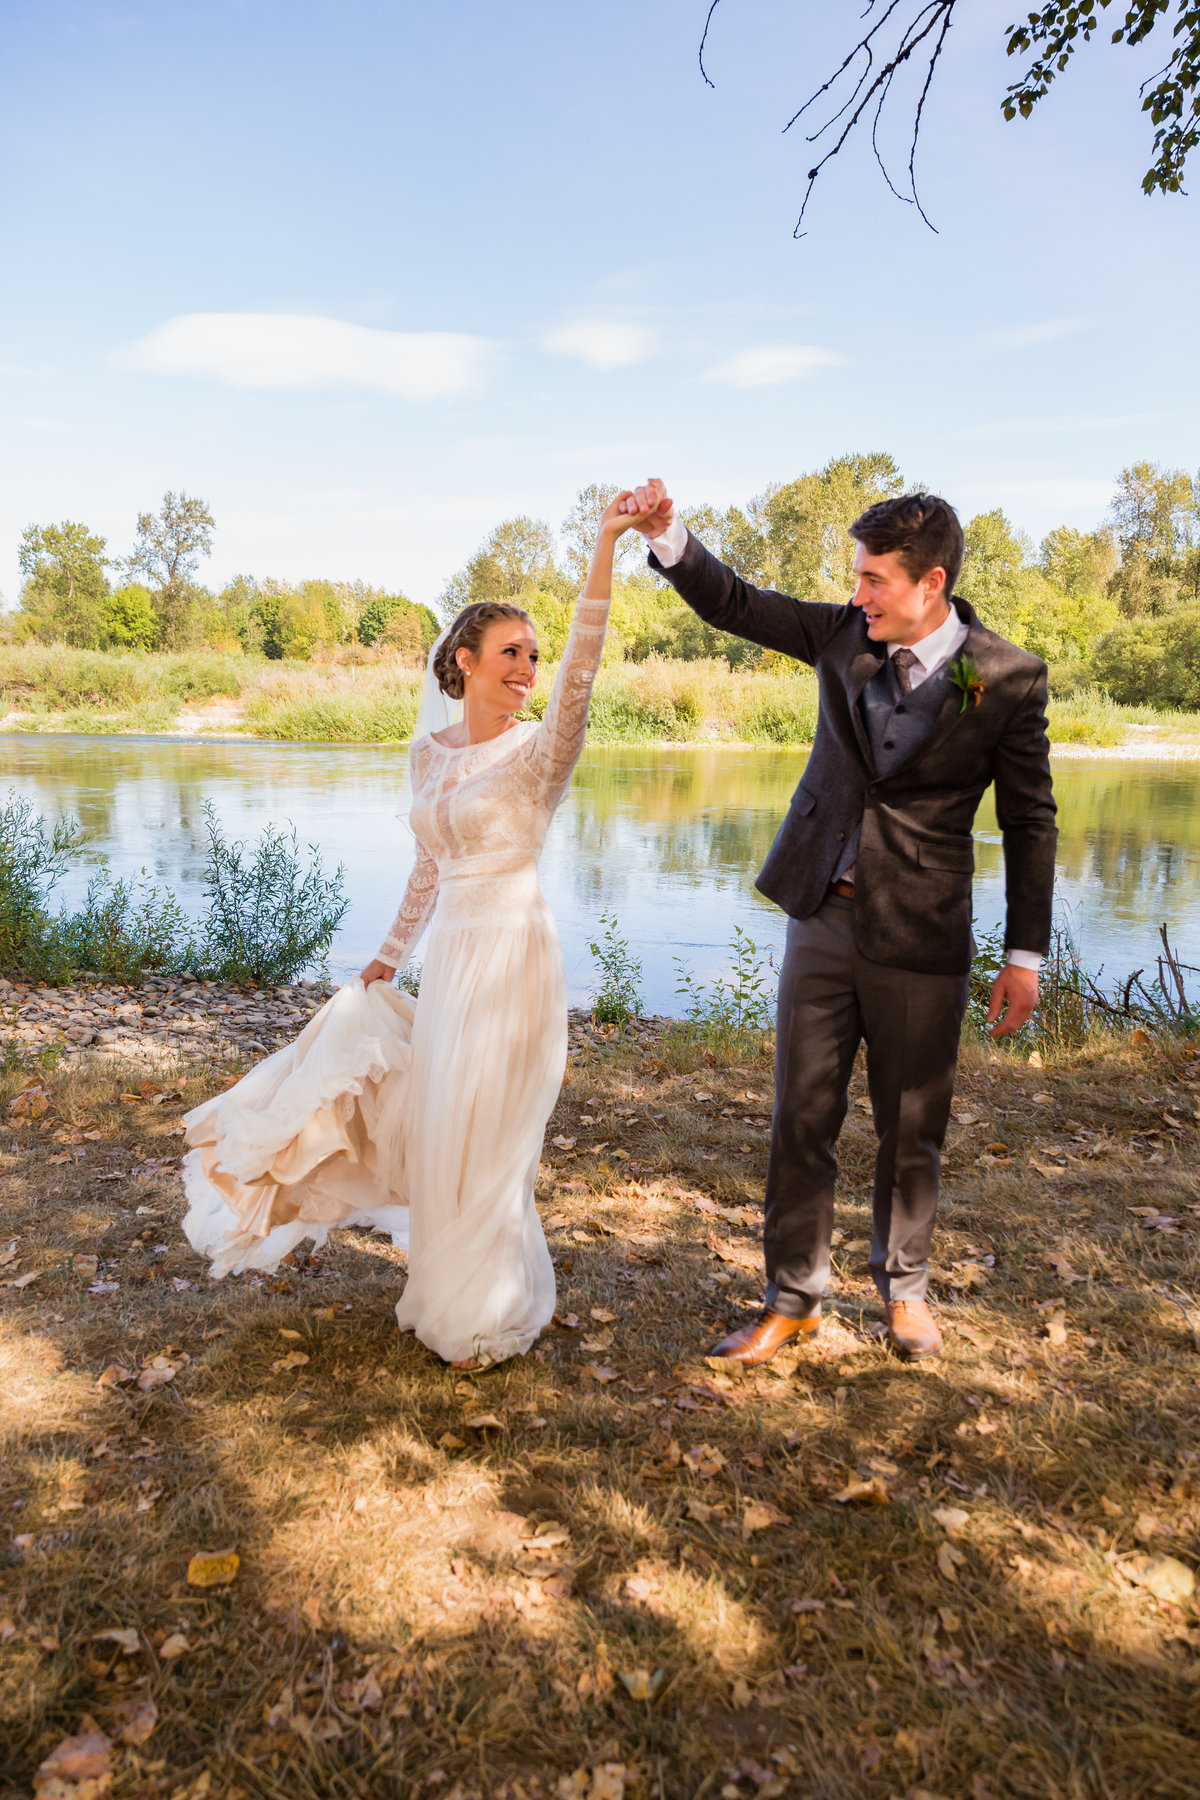 Outdoor Lake Wedding Groom Bride Adventure Dancing